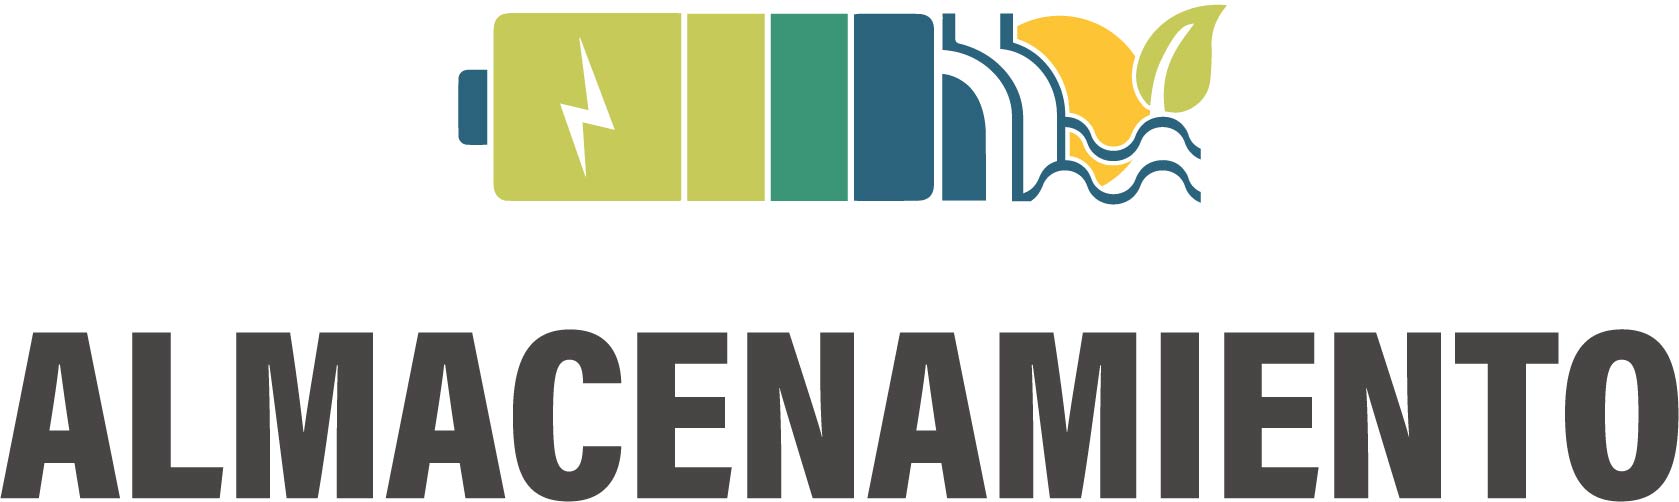 Logotipo Almacenami...